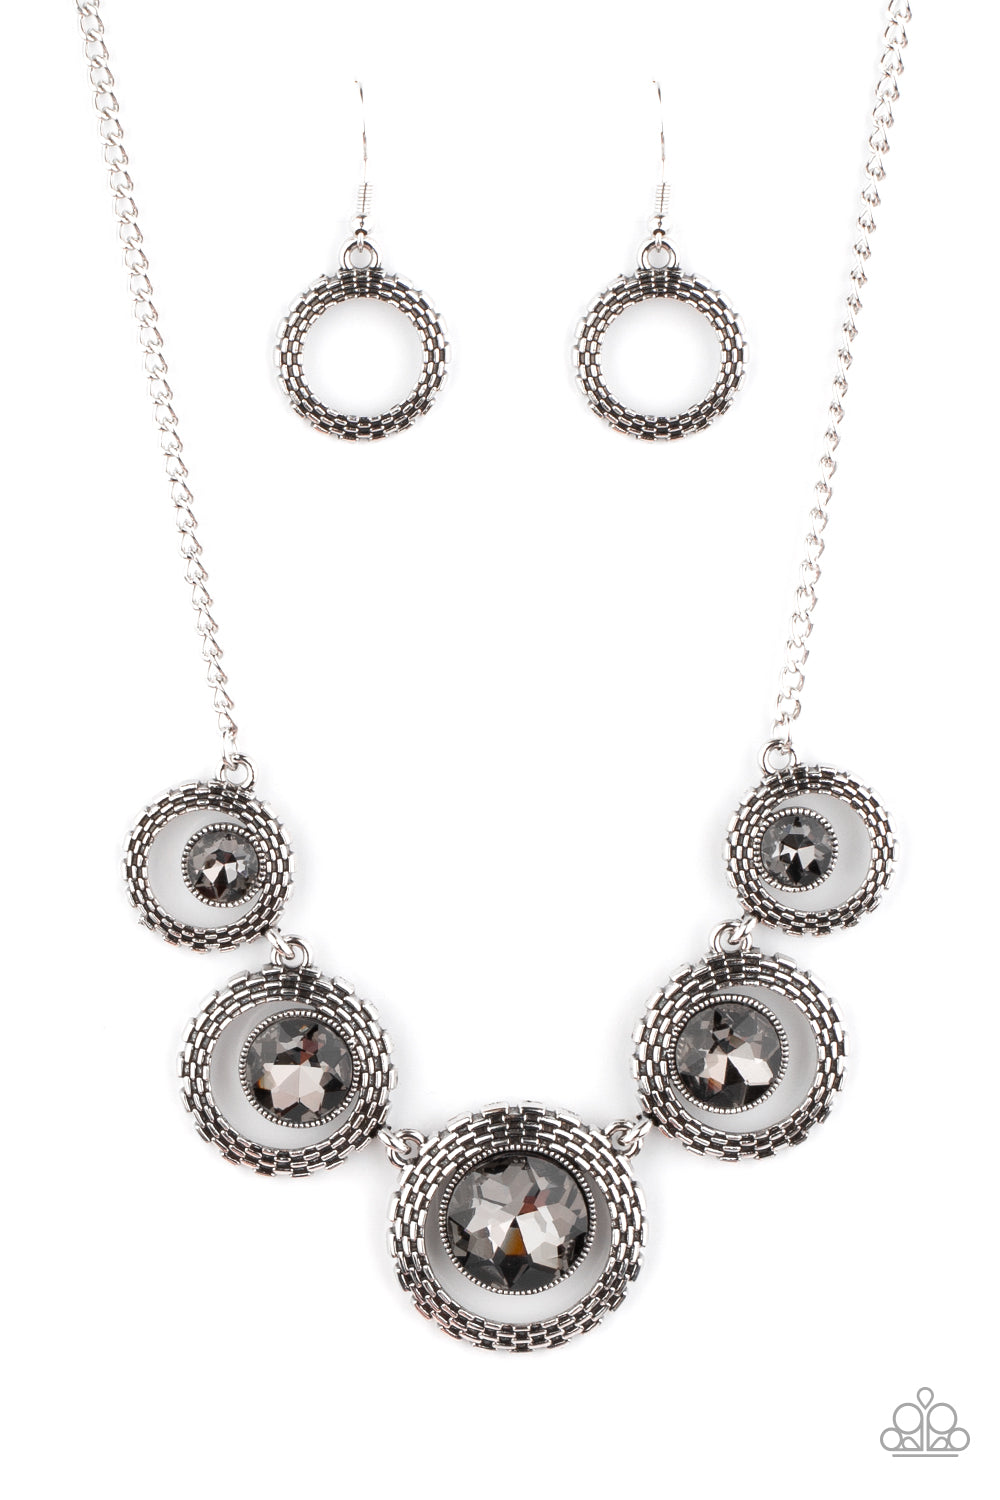 PIXEL Perfect - Silver Necklace freeshipping - JewLz4u Gemstone Gallery